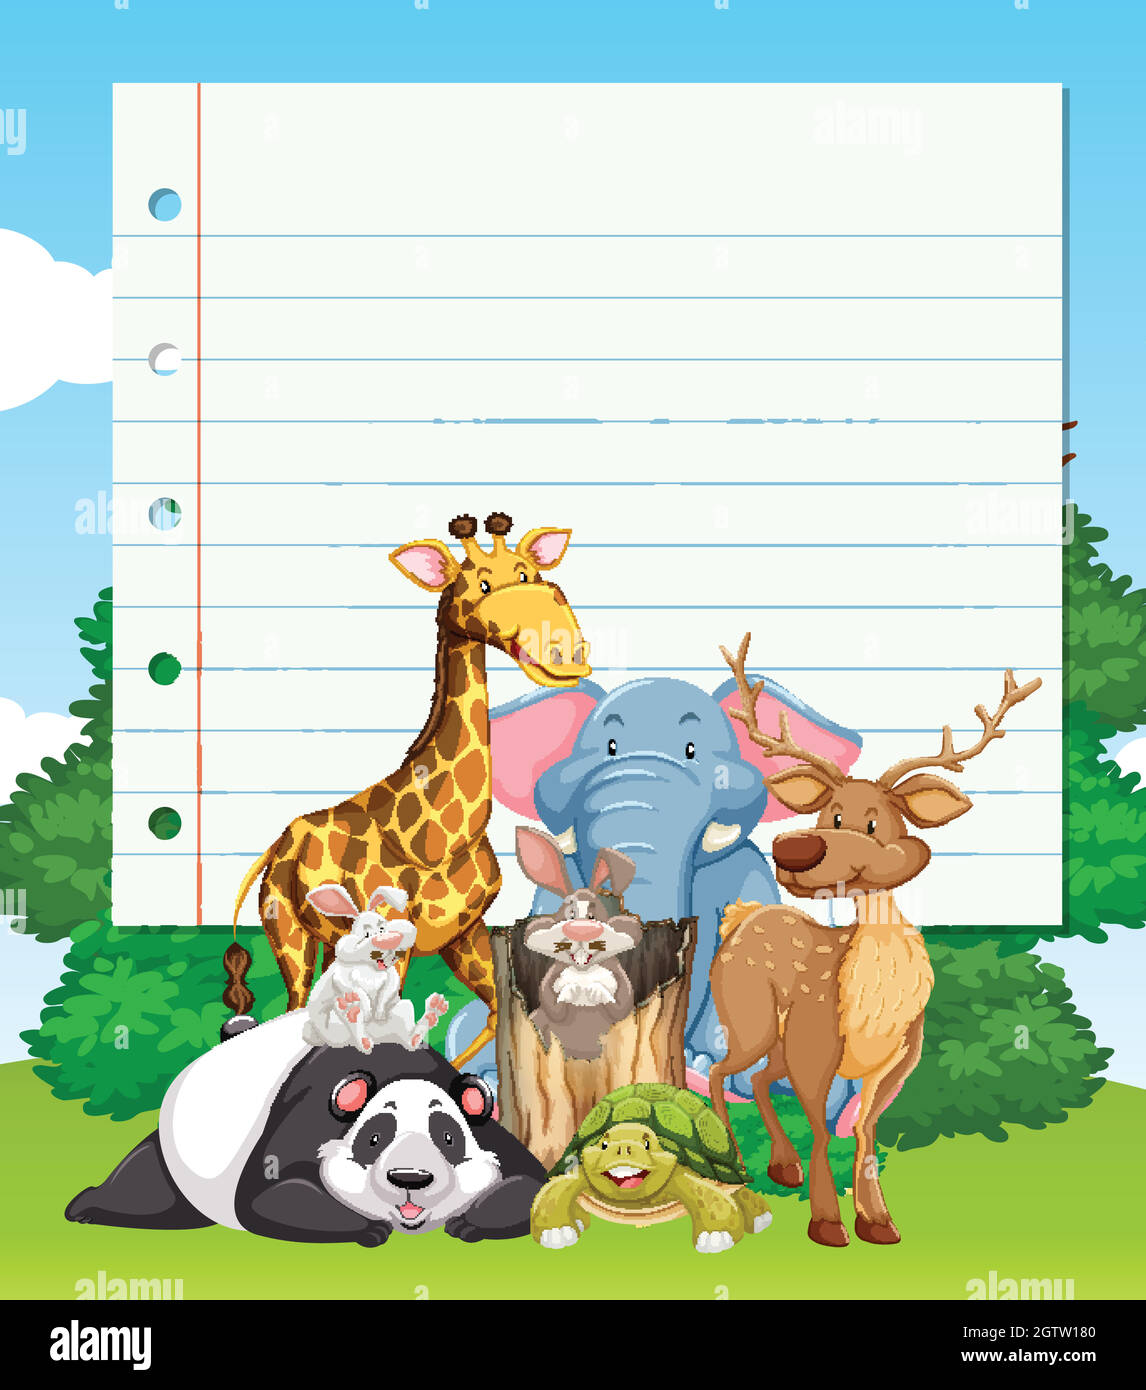 Border design panda illustration hi-res stock photography and images - Alamy